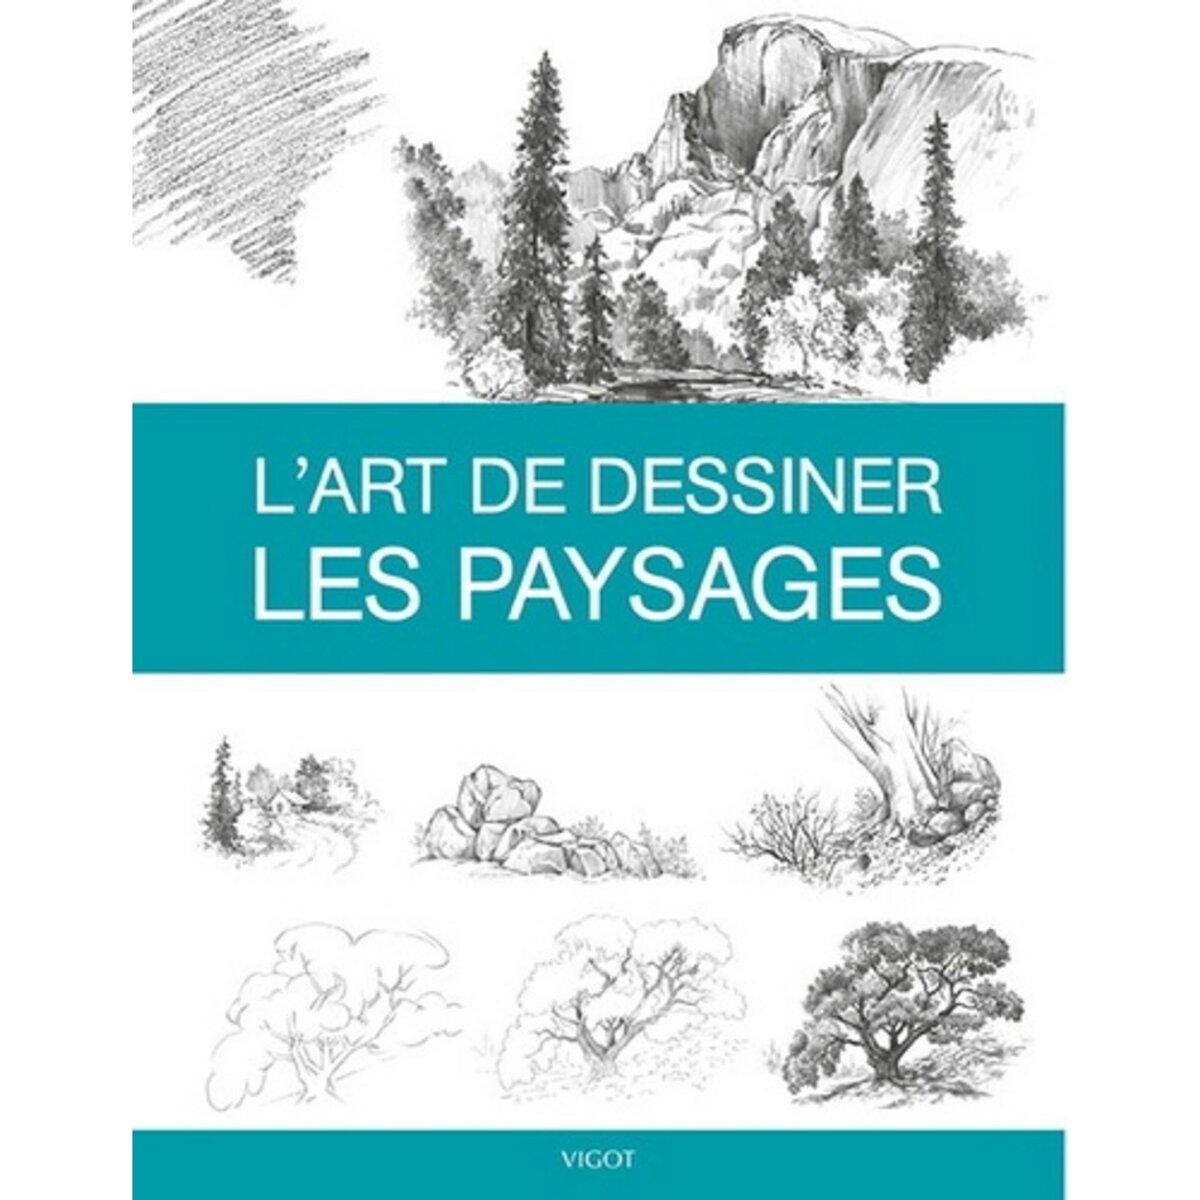  L'ART DE DESSINER LES PAYSAGES, Foster Walter